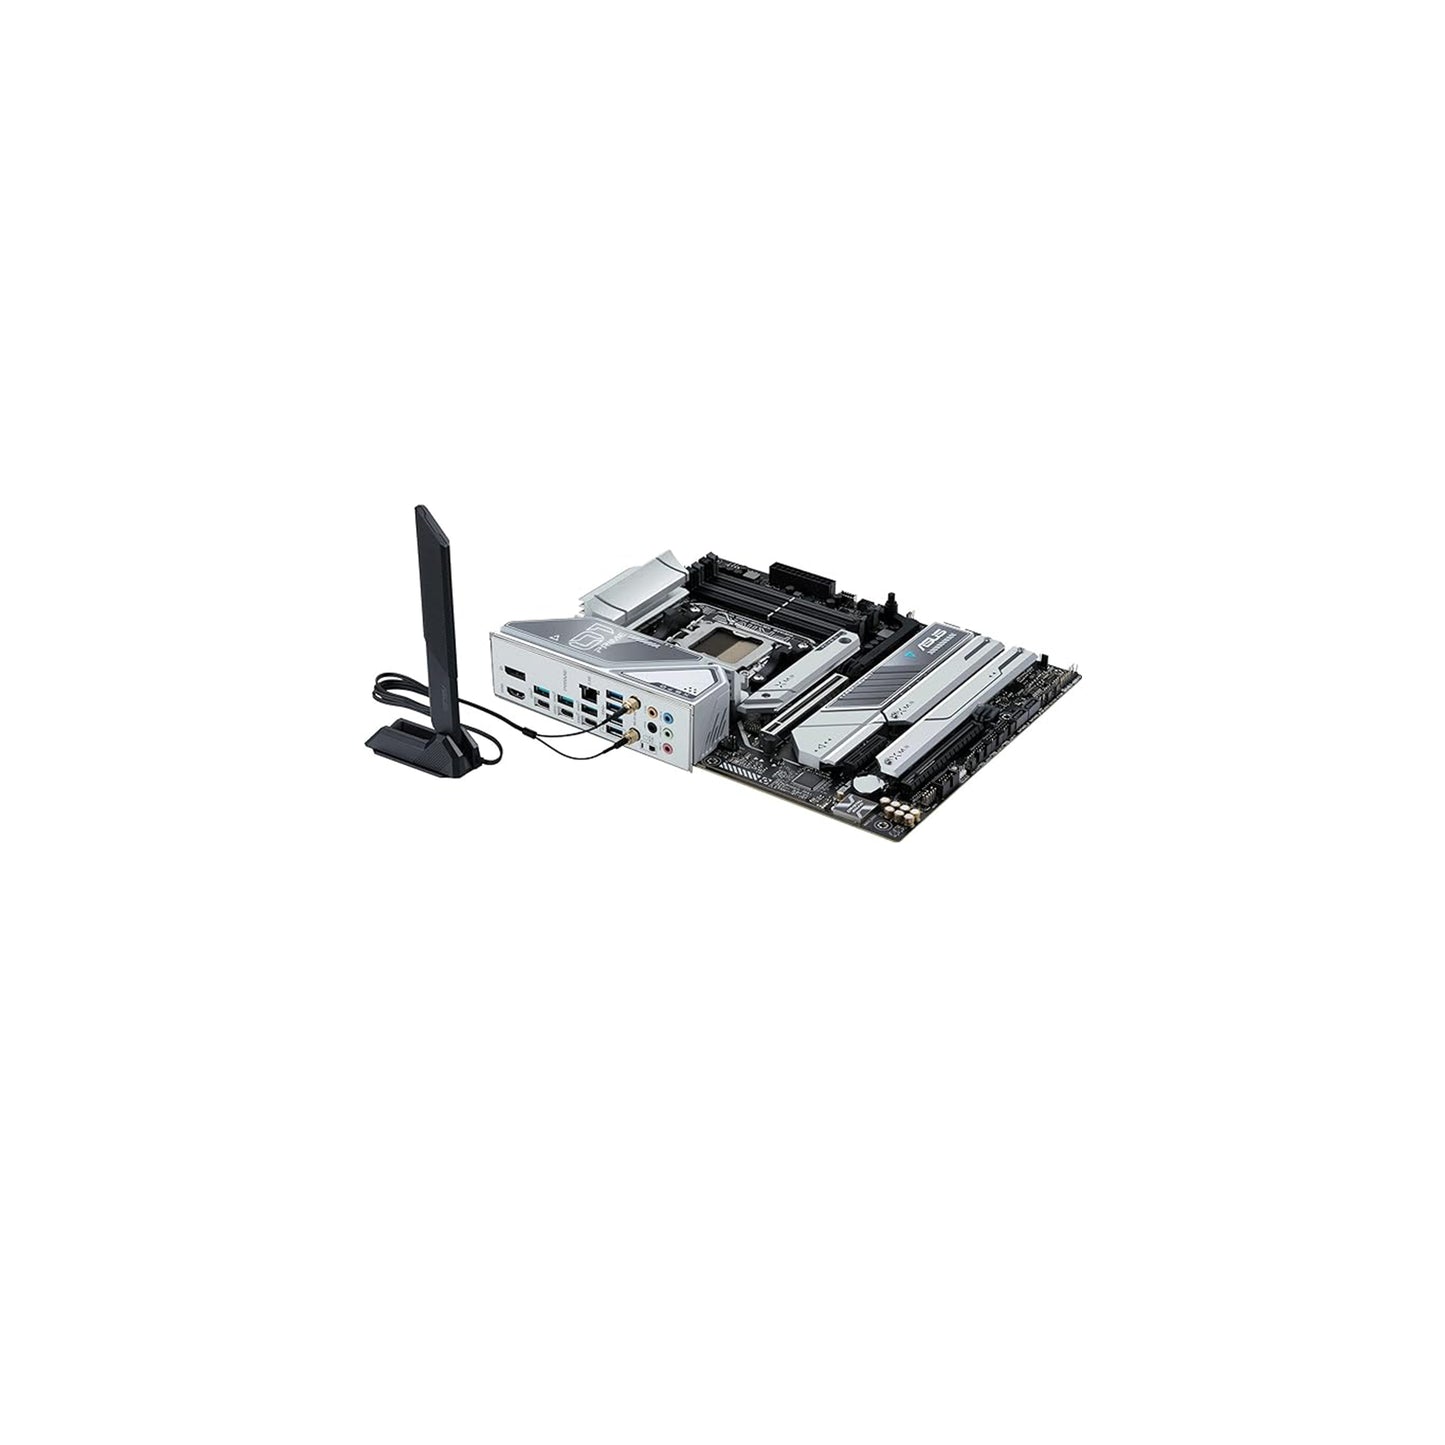 مقبس ASUS Prime X670E-PRO WiFi AM5 (LGA 1718) Ryzen 7000 ATX اللوحة الأم (فتحات PCIe® 5.0 وDDR5 و4X M.2 وUSB 3.2 Gen 2x2 Type-C® ودعم USB4® وWiFi 6E و2.5G Ethernet) 